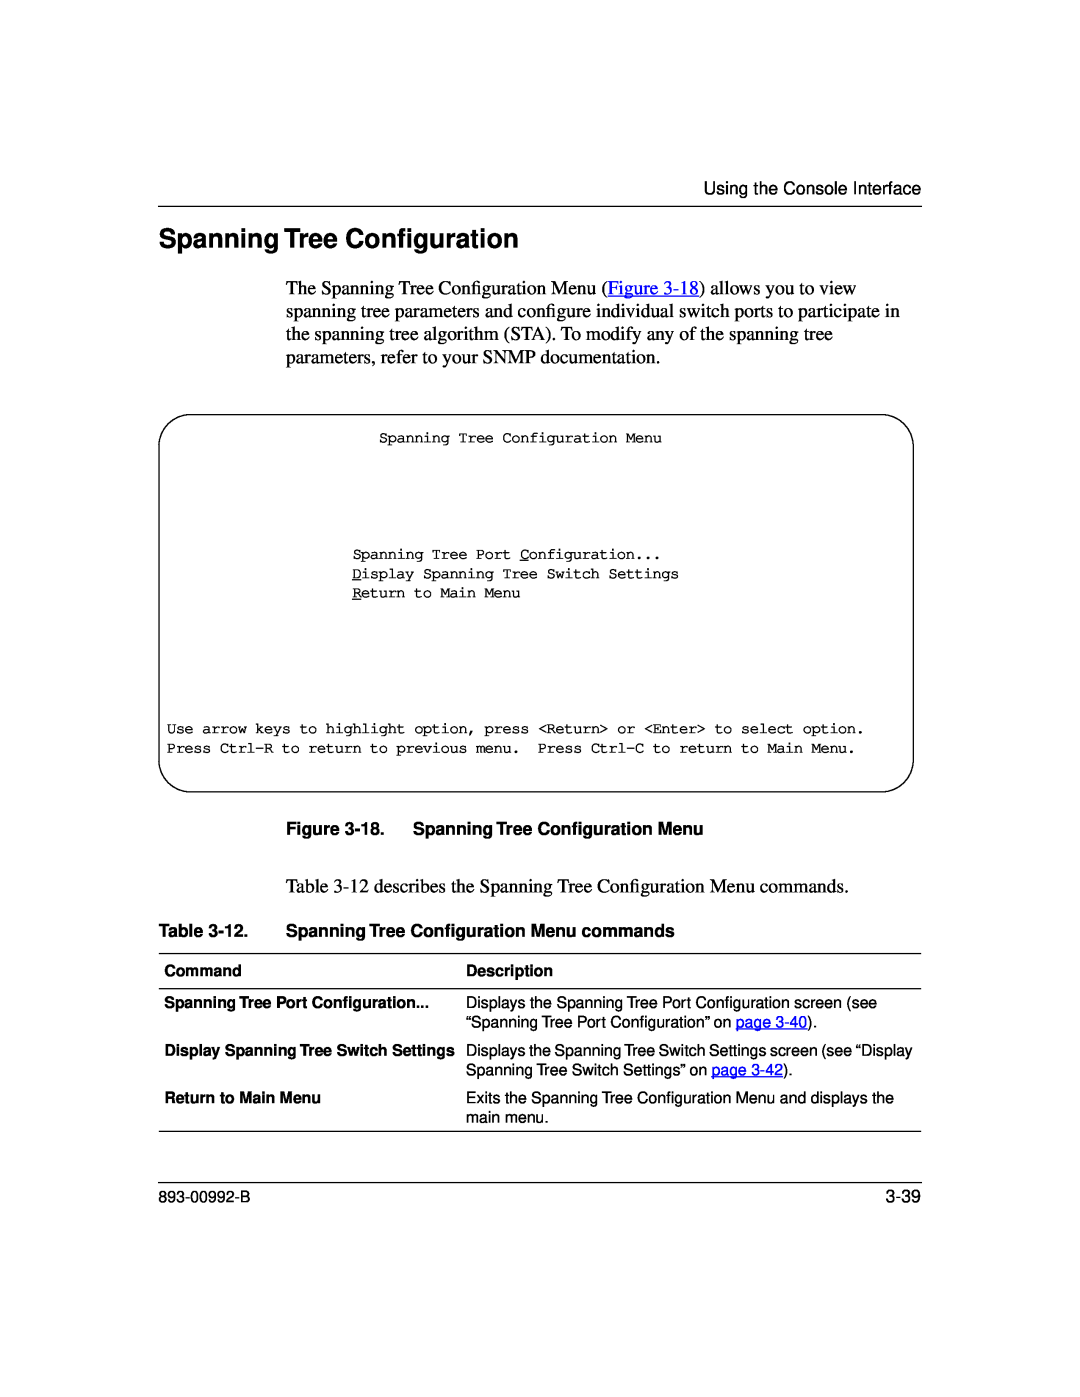 Bay Technical Associates 350 manual Using the Console Interface, 18. Spanning Tree Conﬁguration Menu, 3-39 